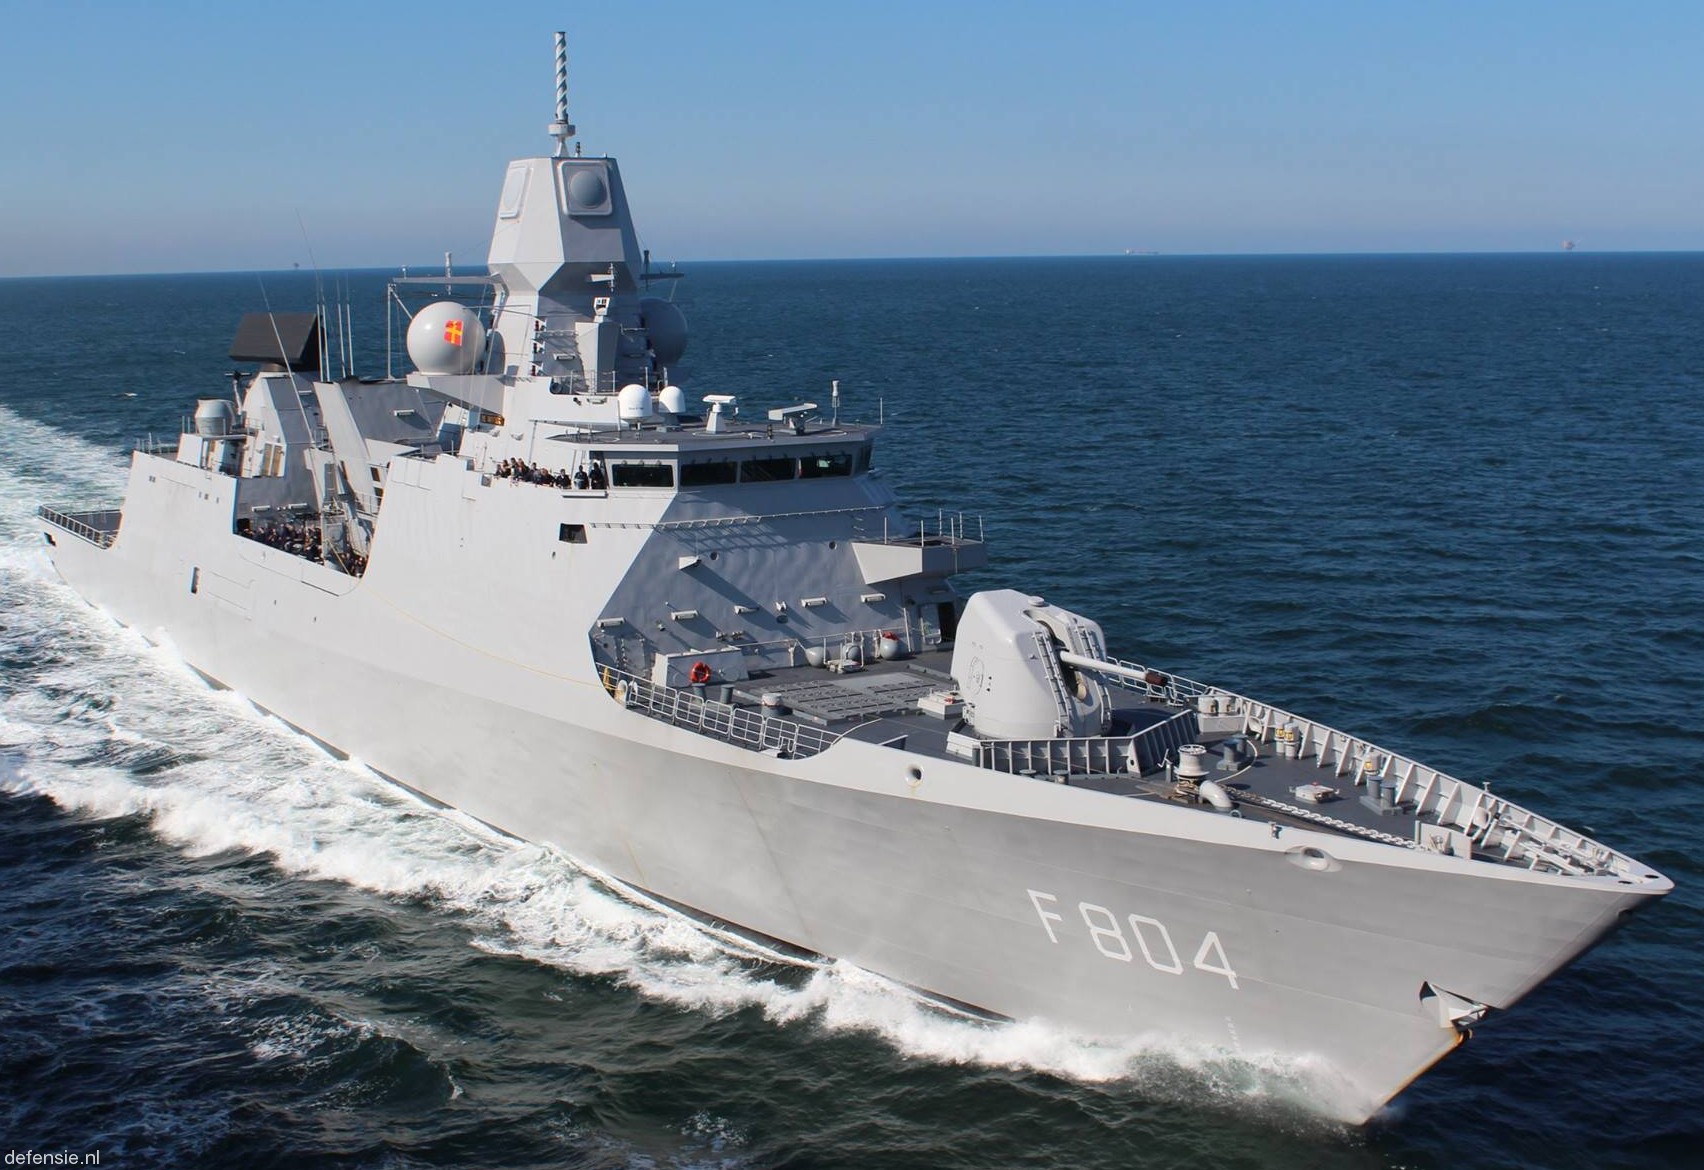 f-804 hnlms de ruyter guided missile frigate ffg lcf royal netherlands navy 19